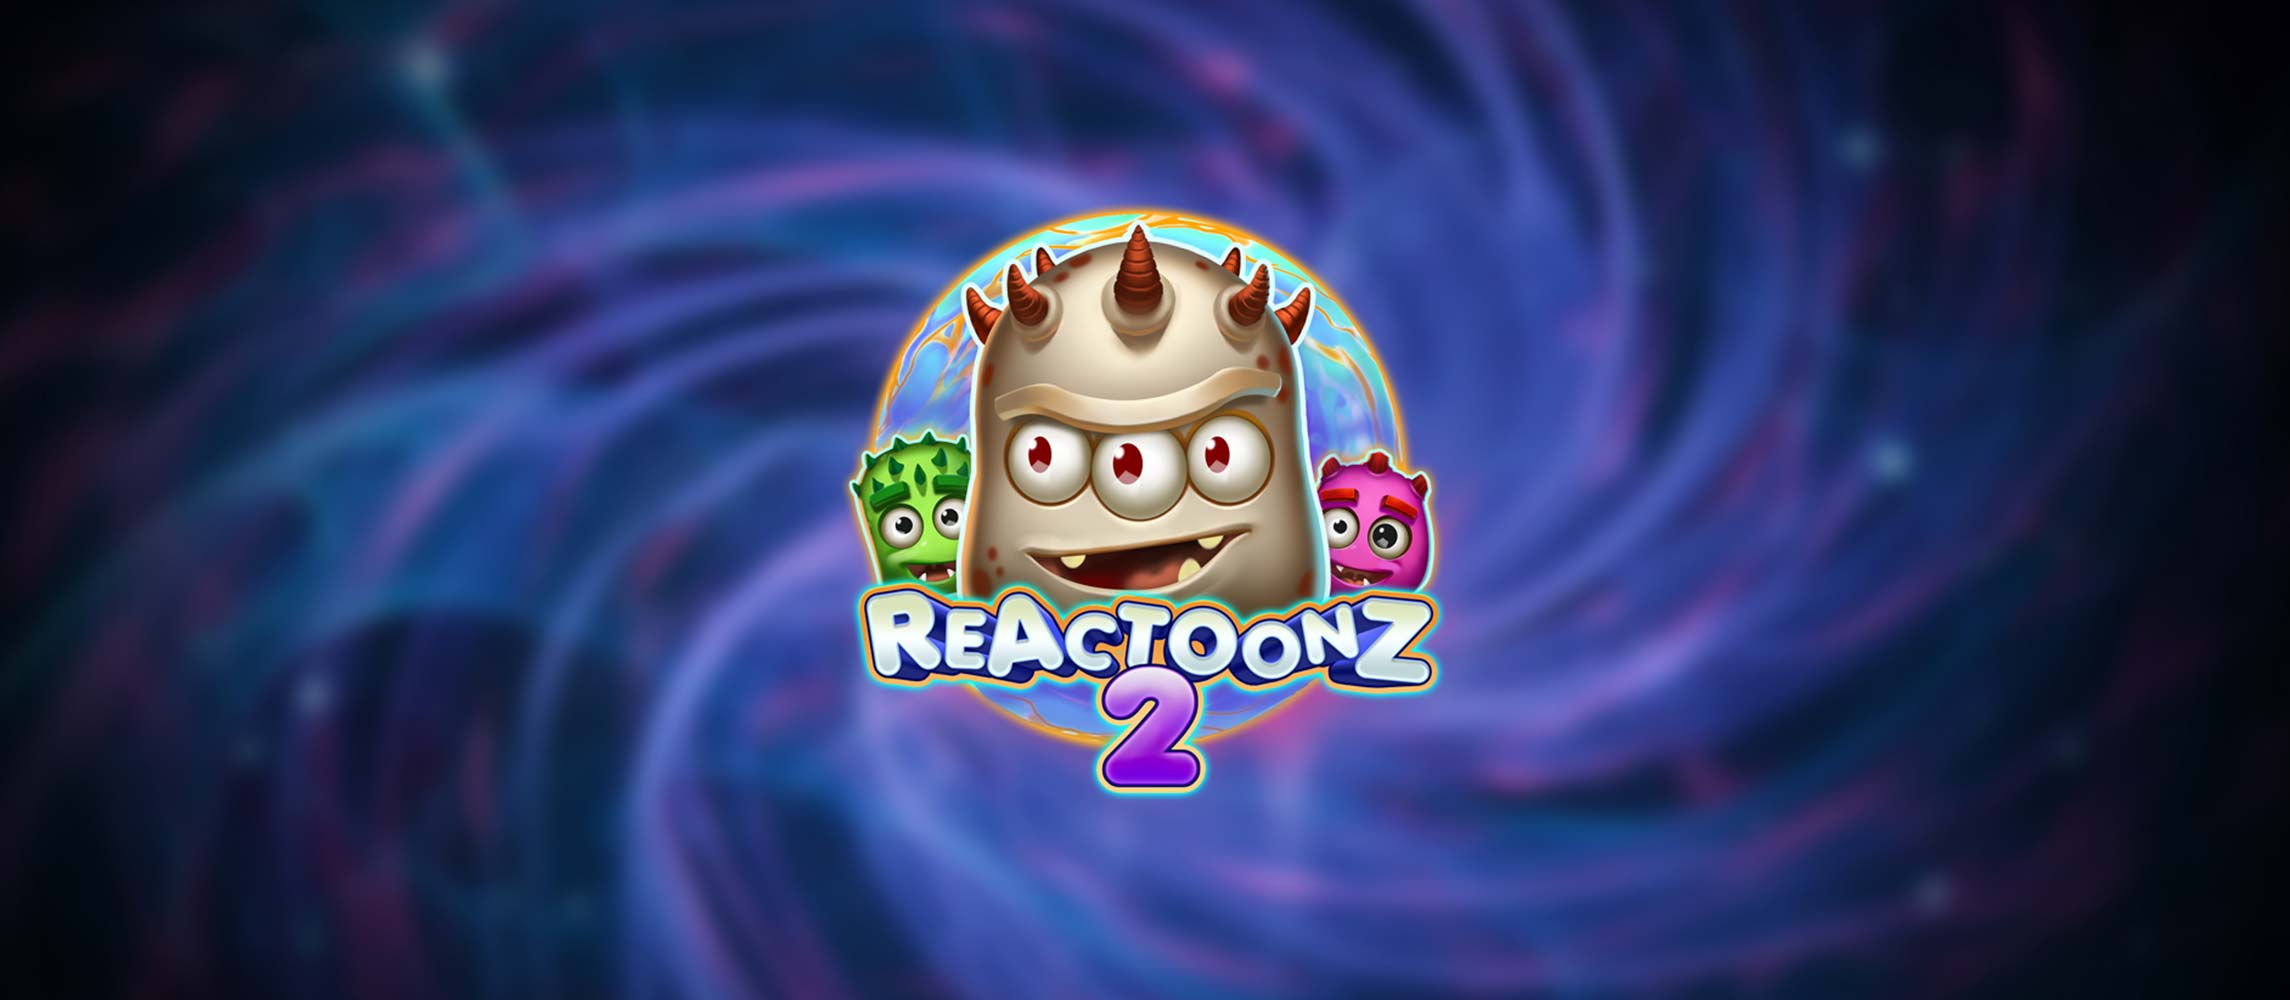 Reactoonz 2 Online Slot by Play‘n GO